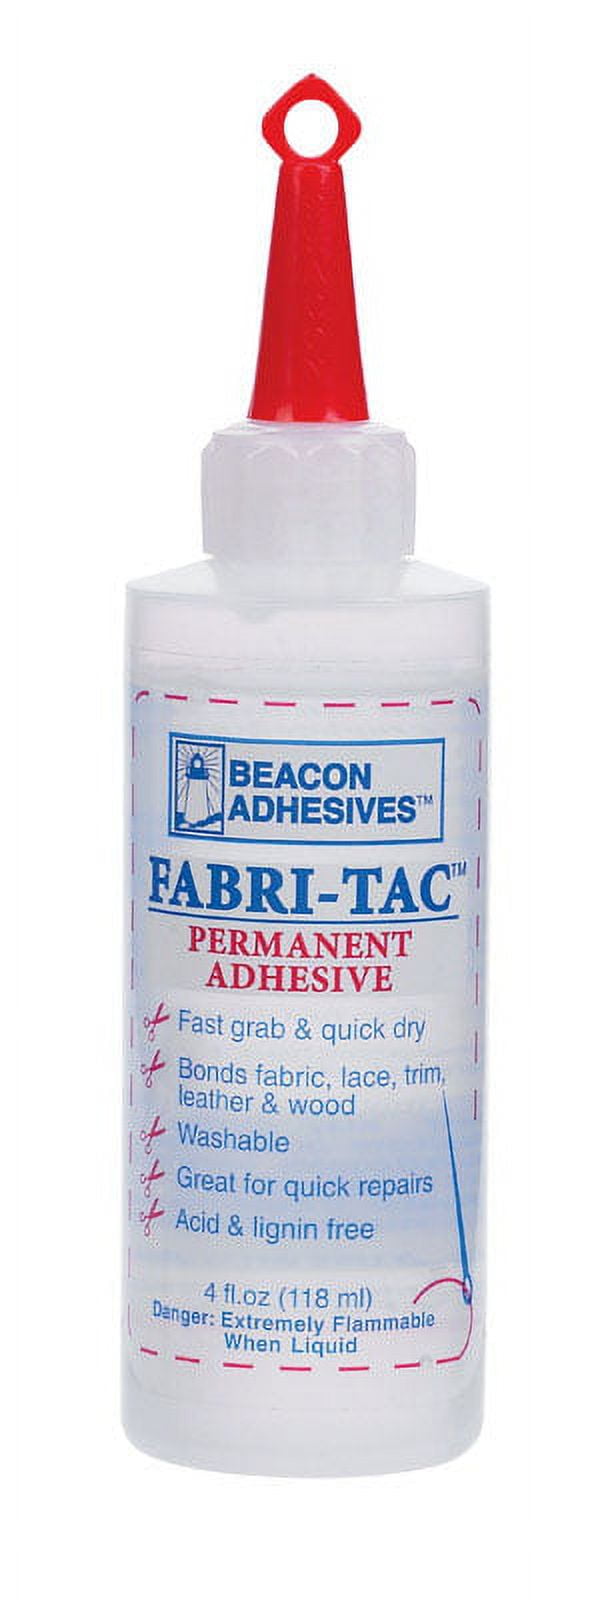 Beacon Fabri-tac Permanent Adhesive -  Denmark